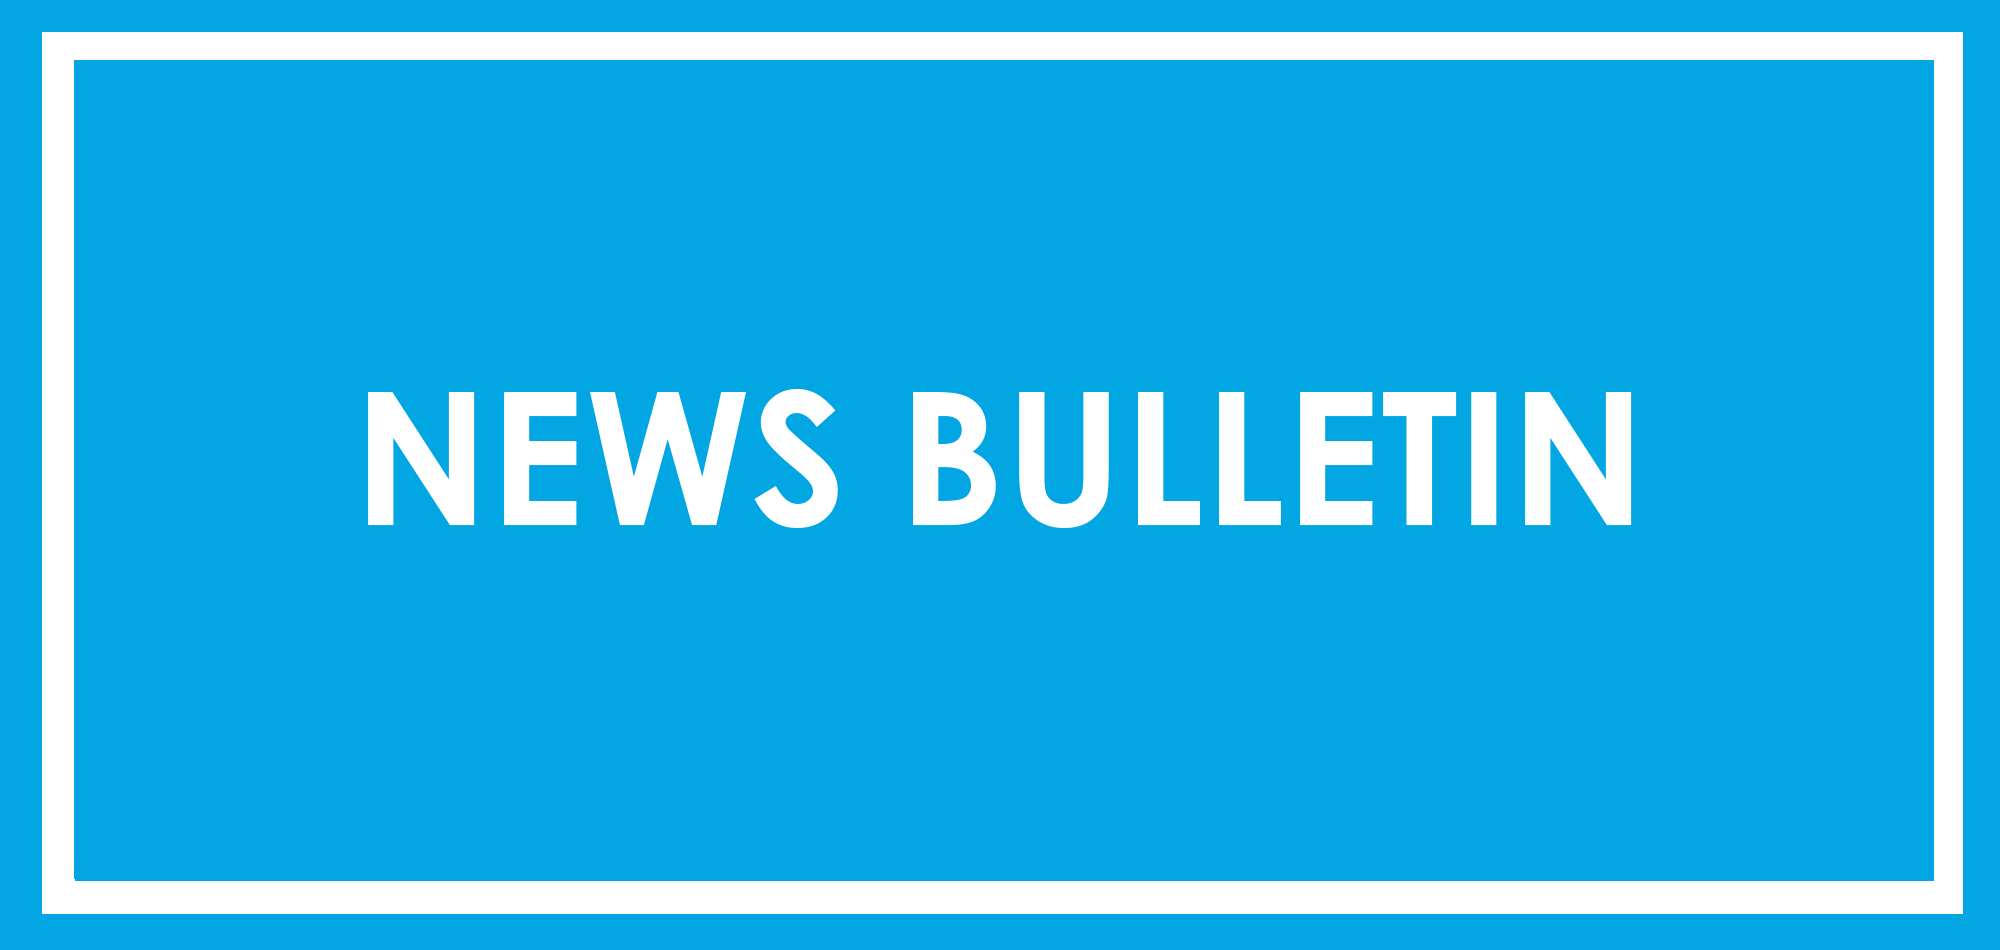 News Bulletin - 13.10.21